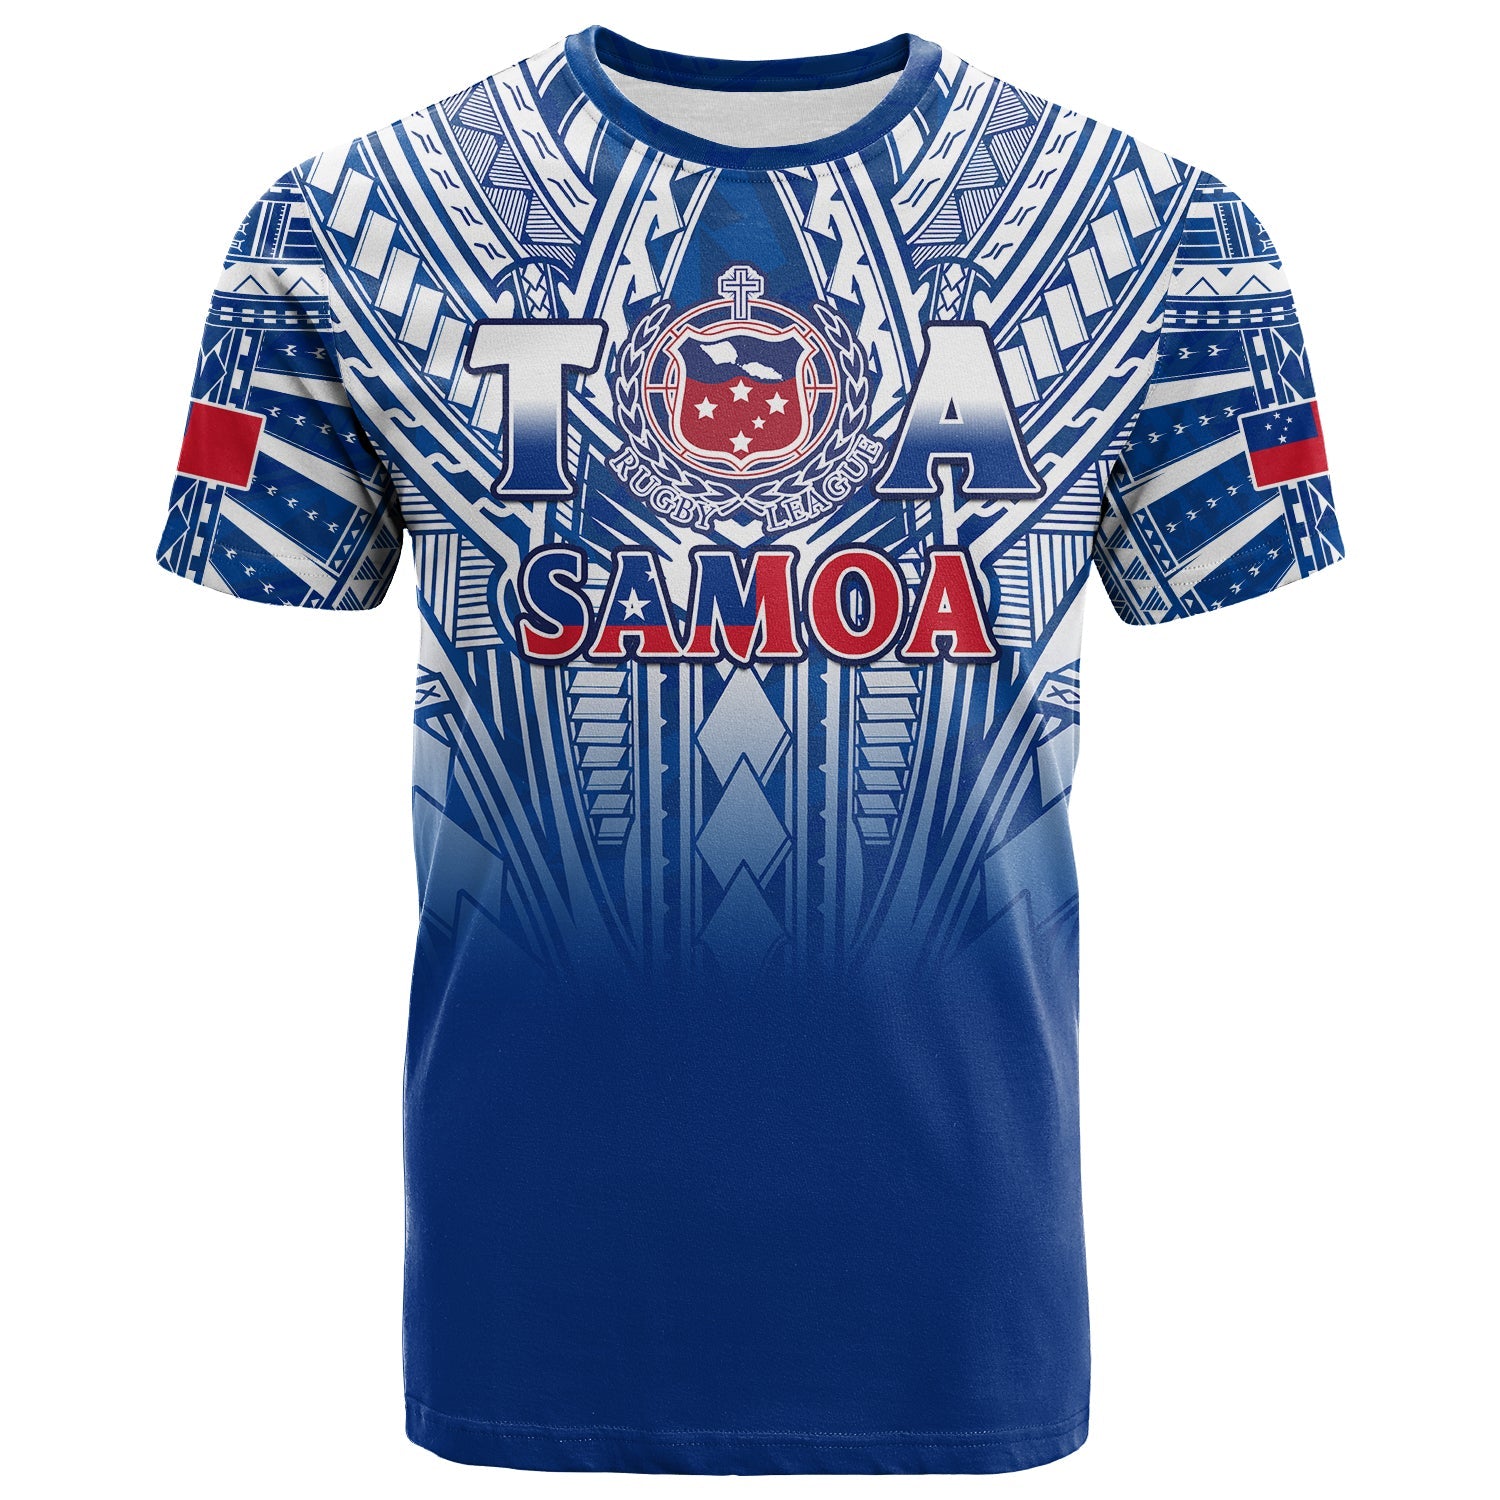 Samoa Rugby T Shirt Toa Samoa Polynesian Pacific Navy Version LT14 Adult Blue - Polynesian Pride